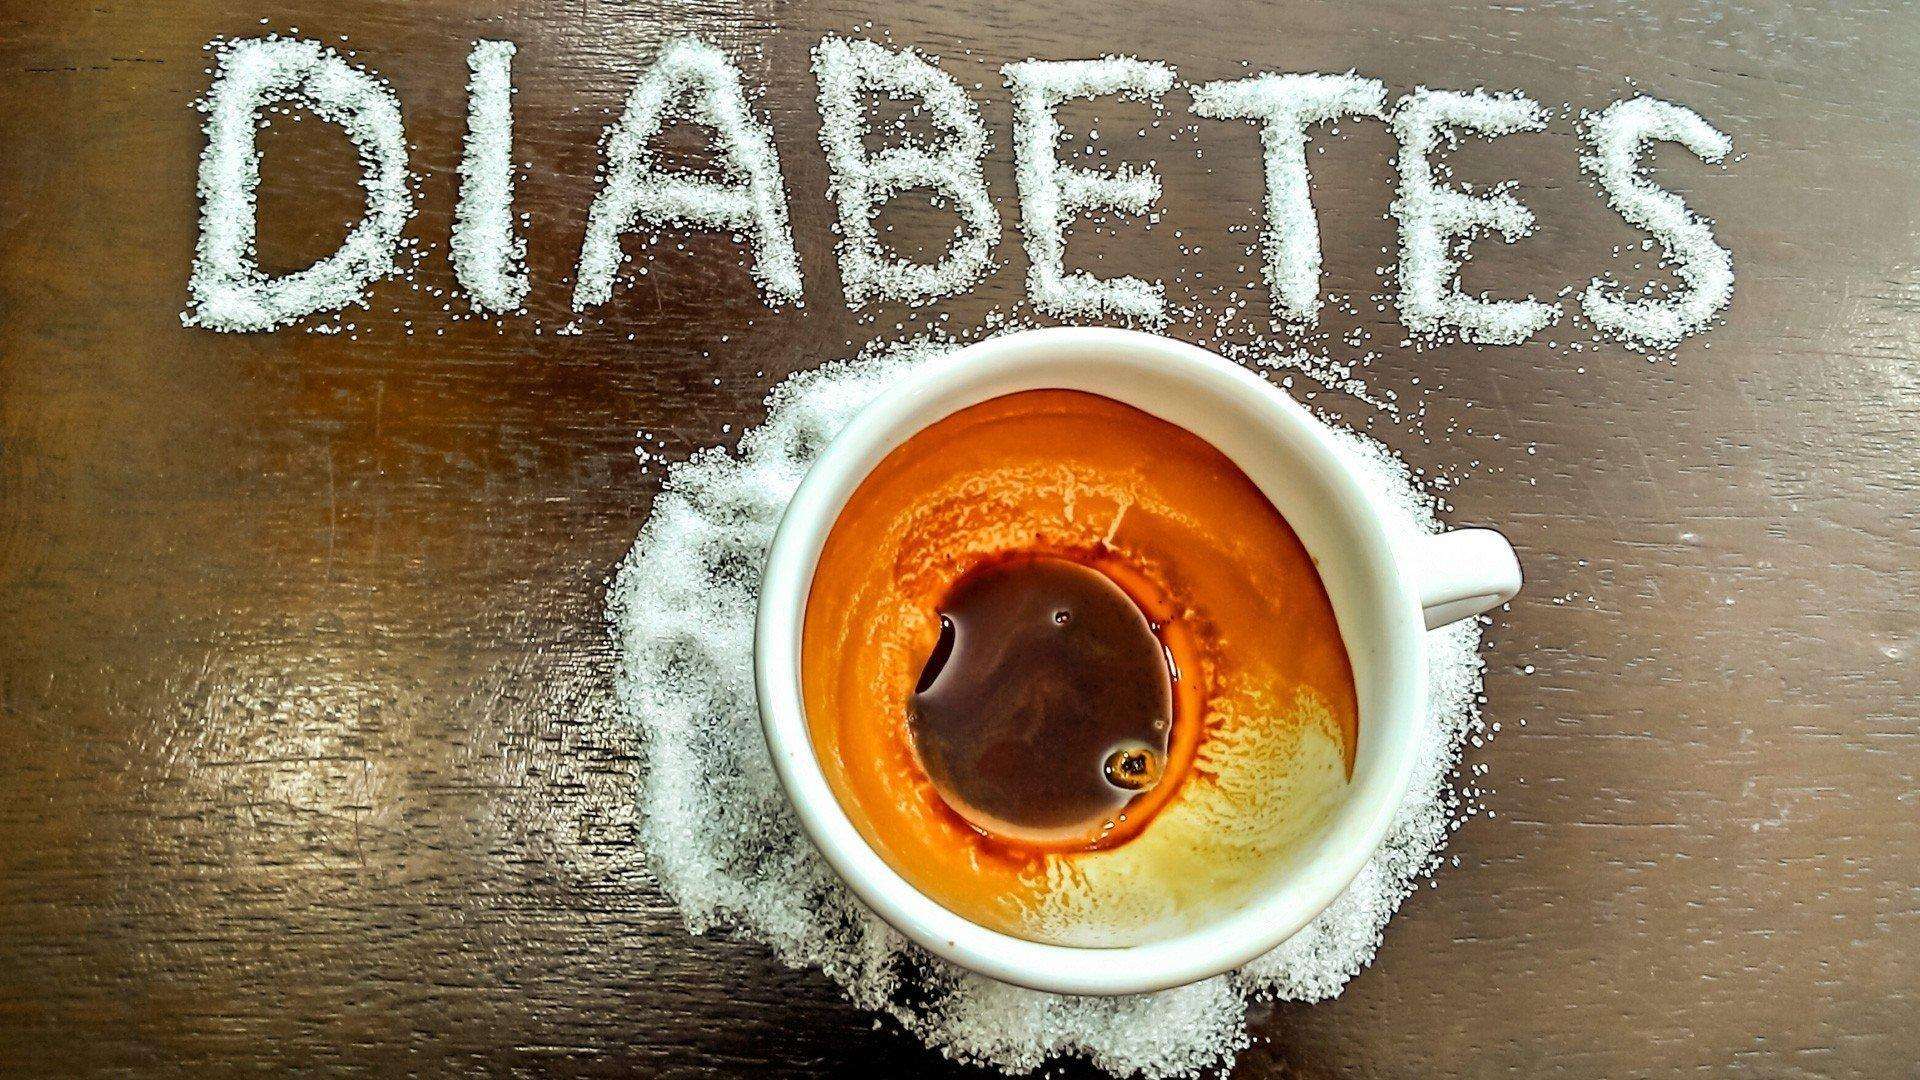 Can Decaf Coffee Raise Your Blood Sugar